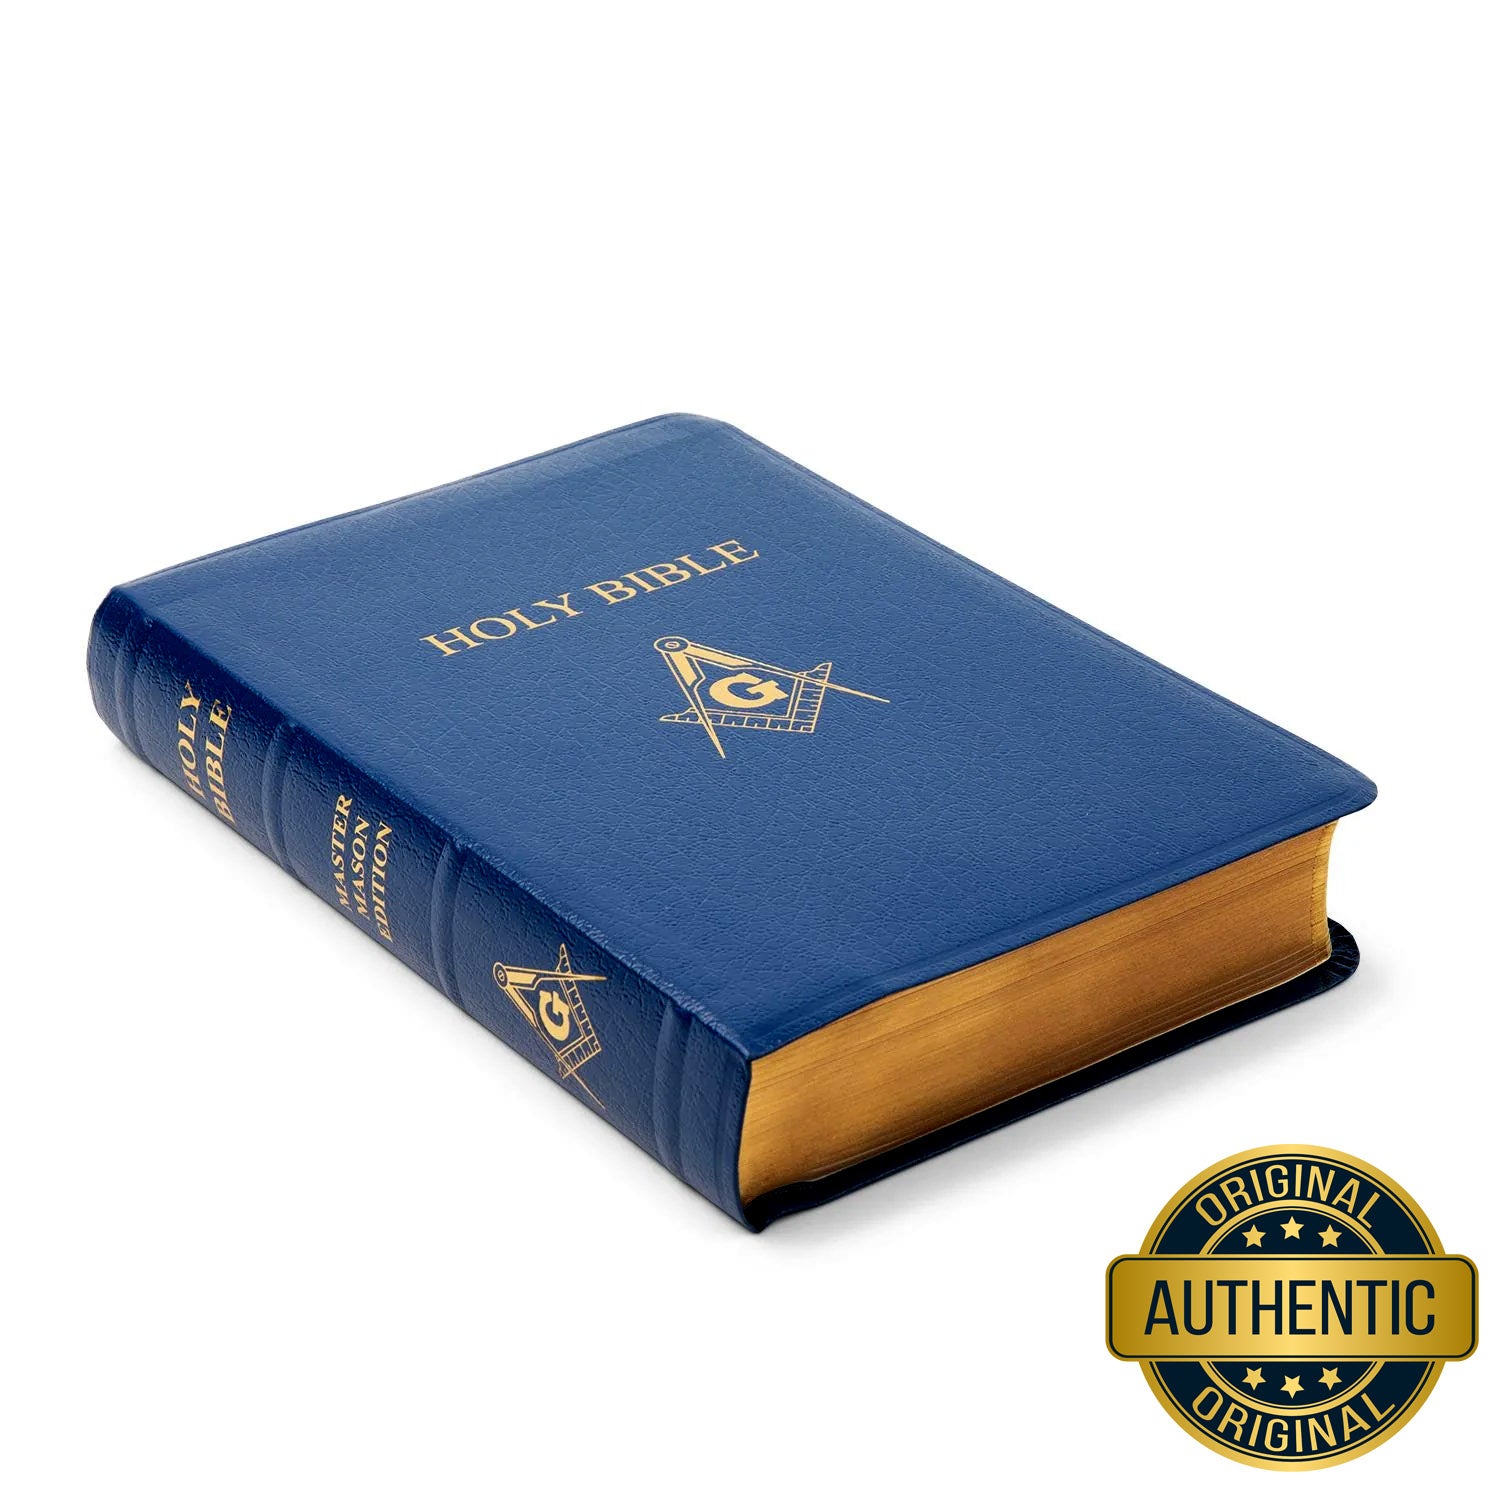 Original Master Mason Edition Masonic Bible